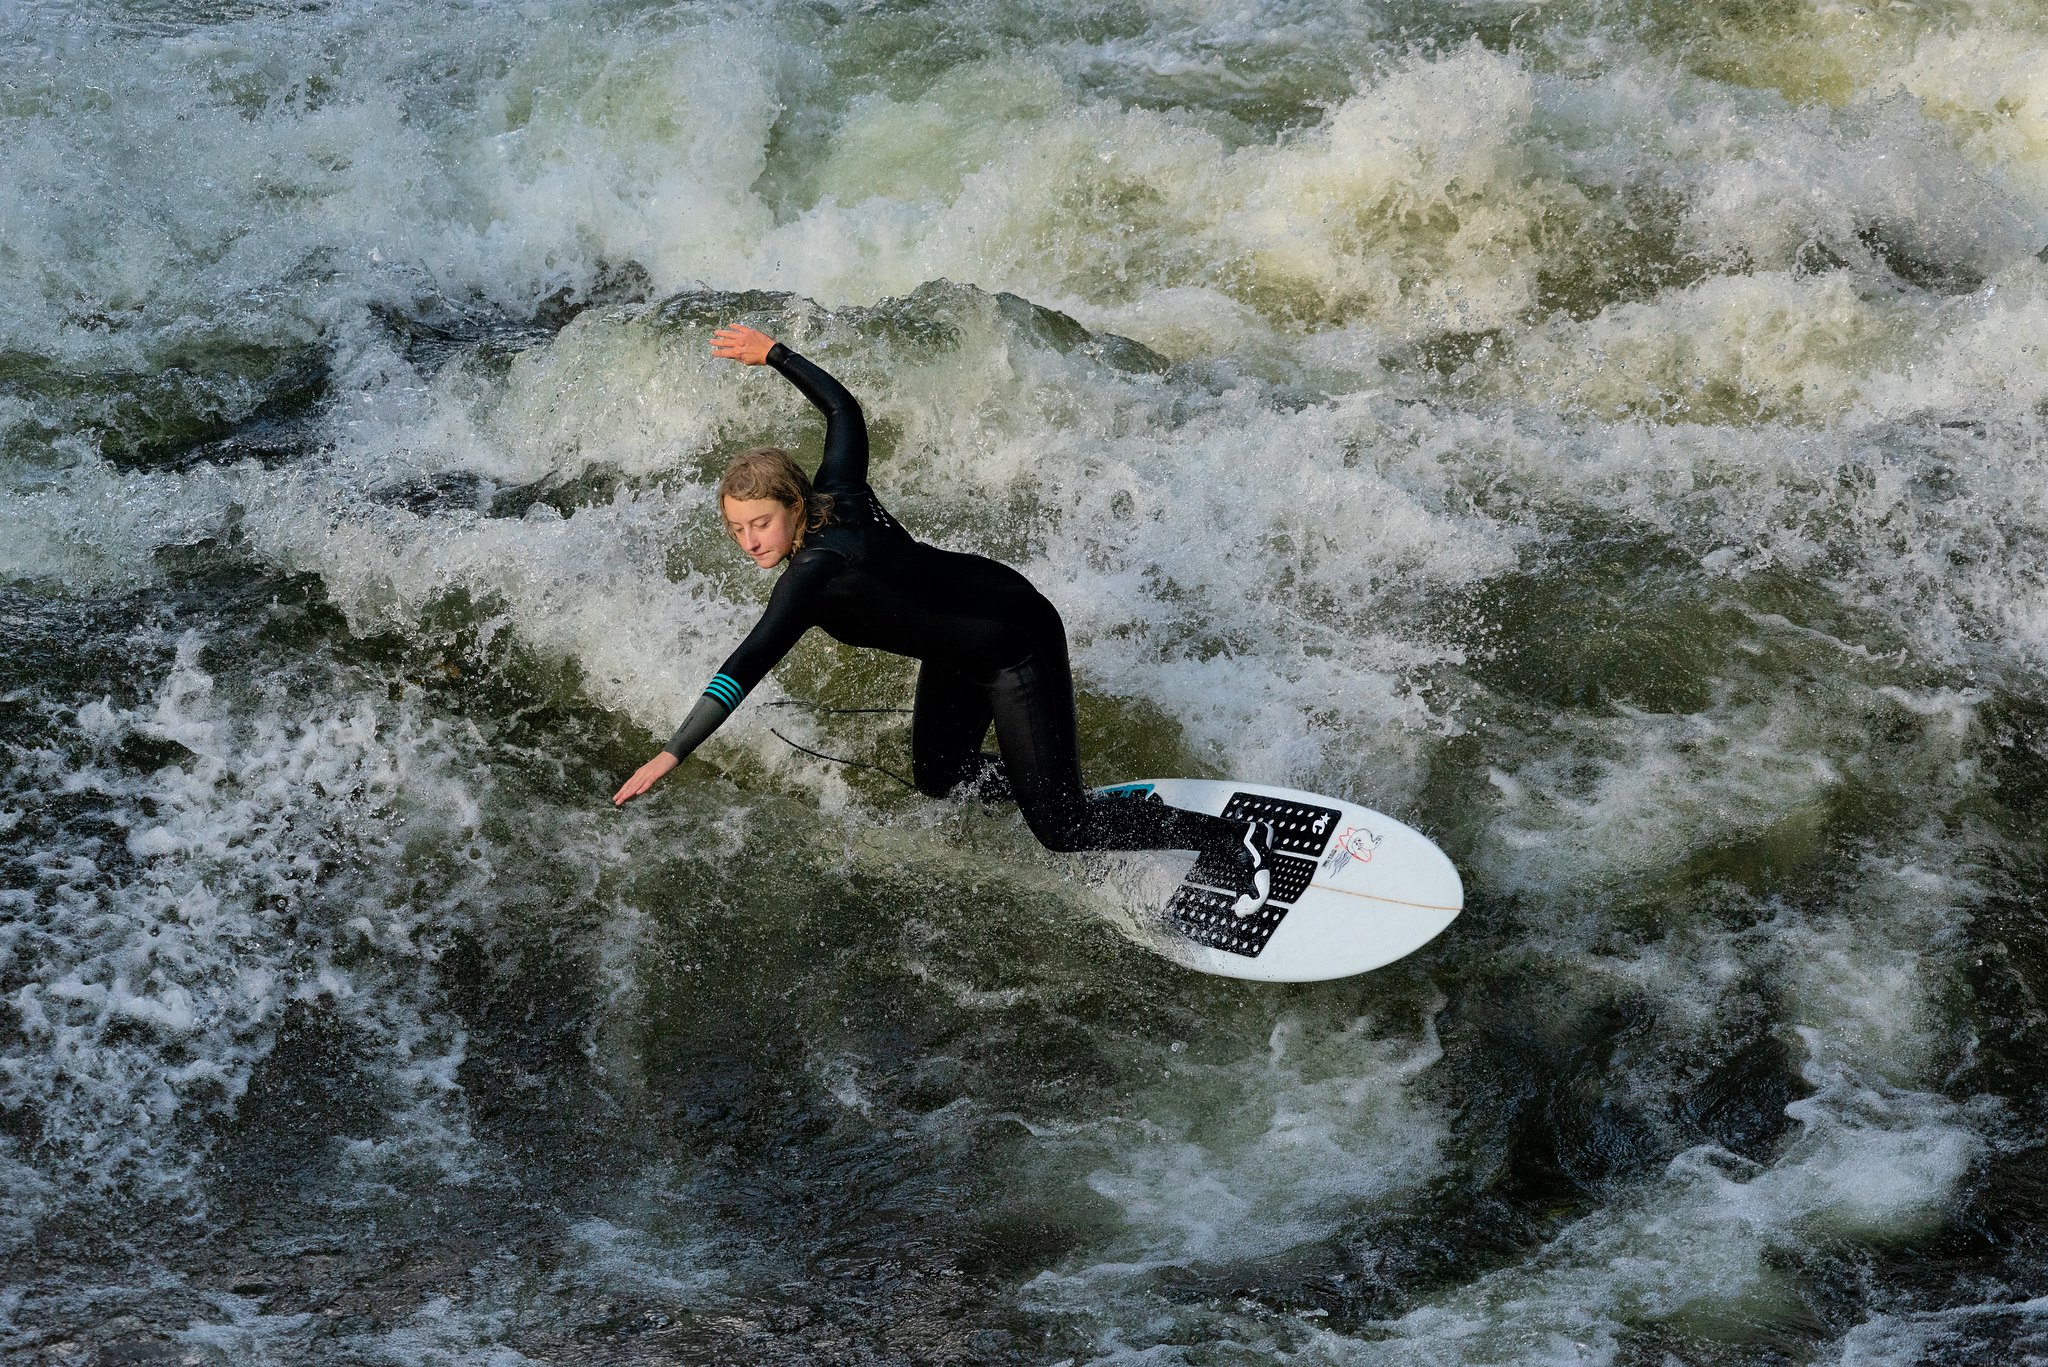 Eisbach river surfer